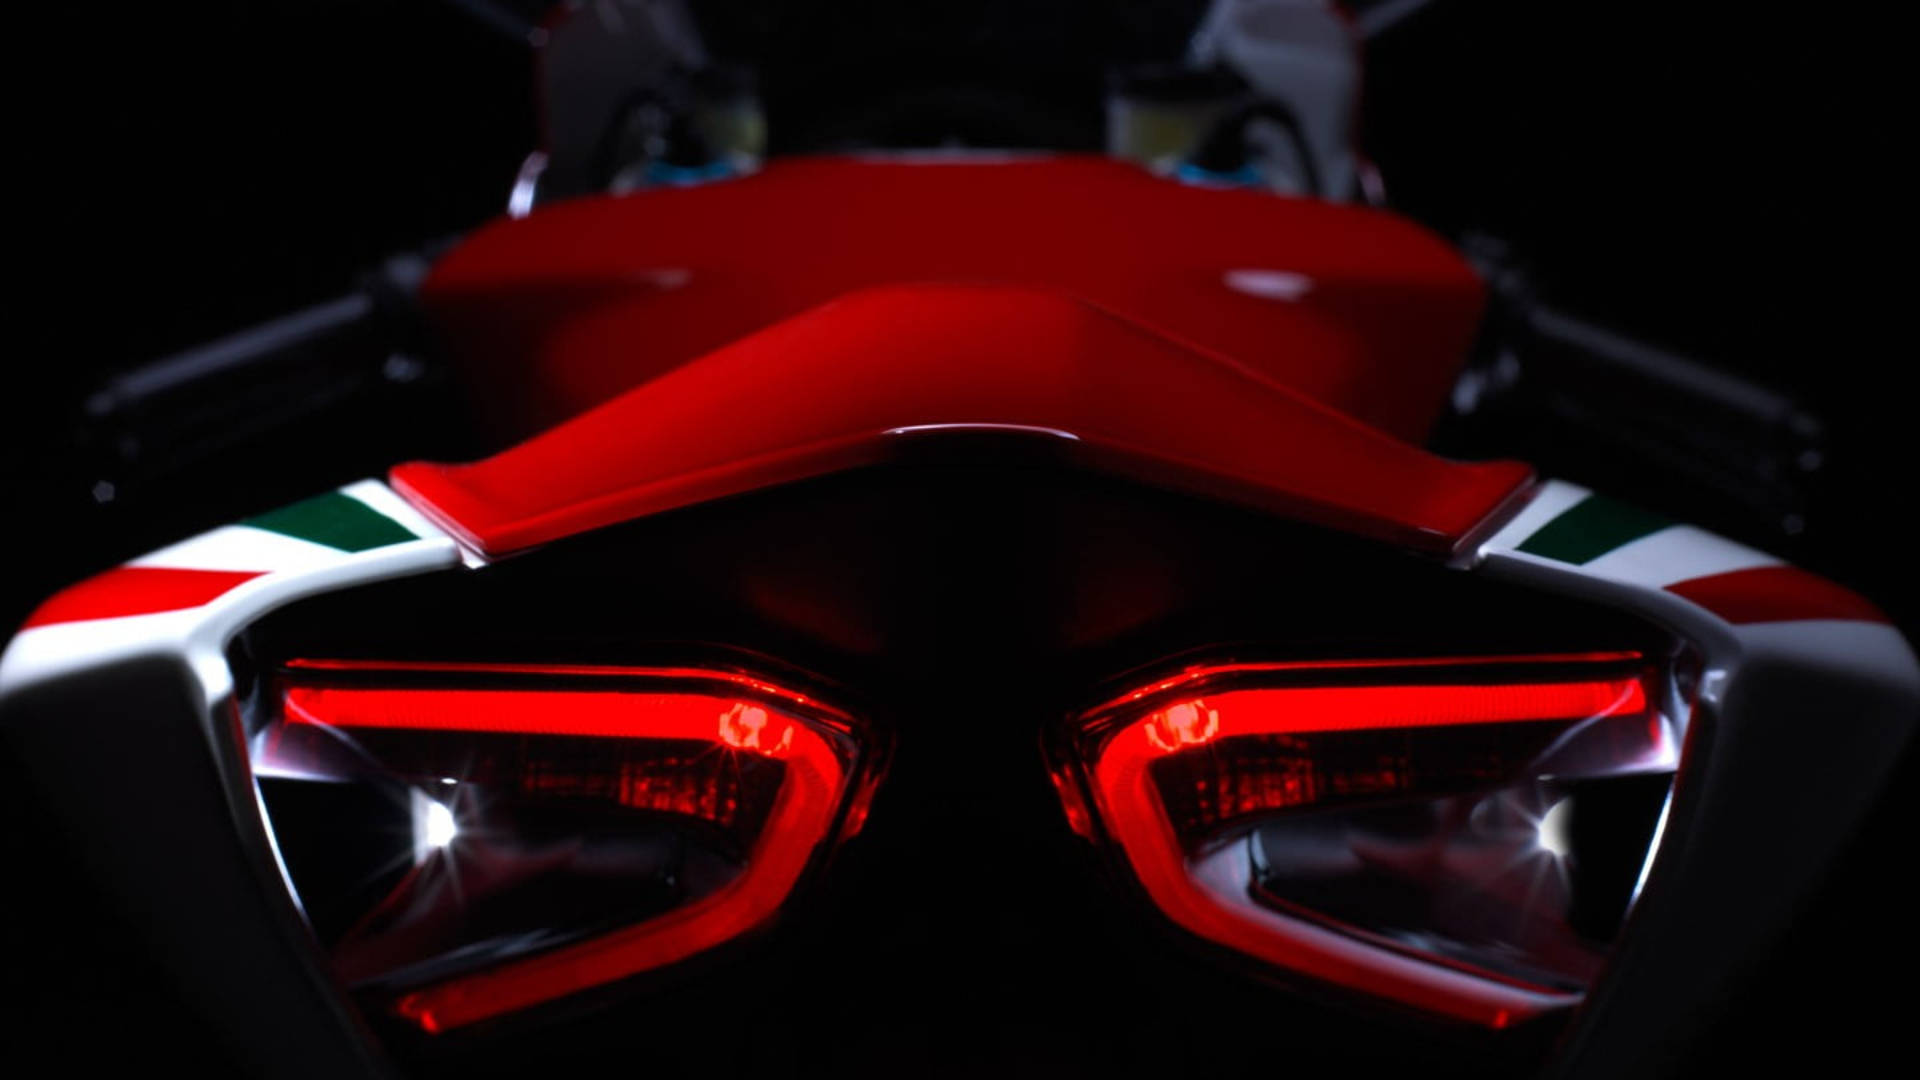 The Powerful 2012 Ducati 1199